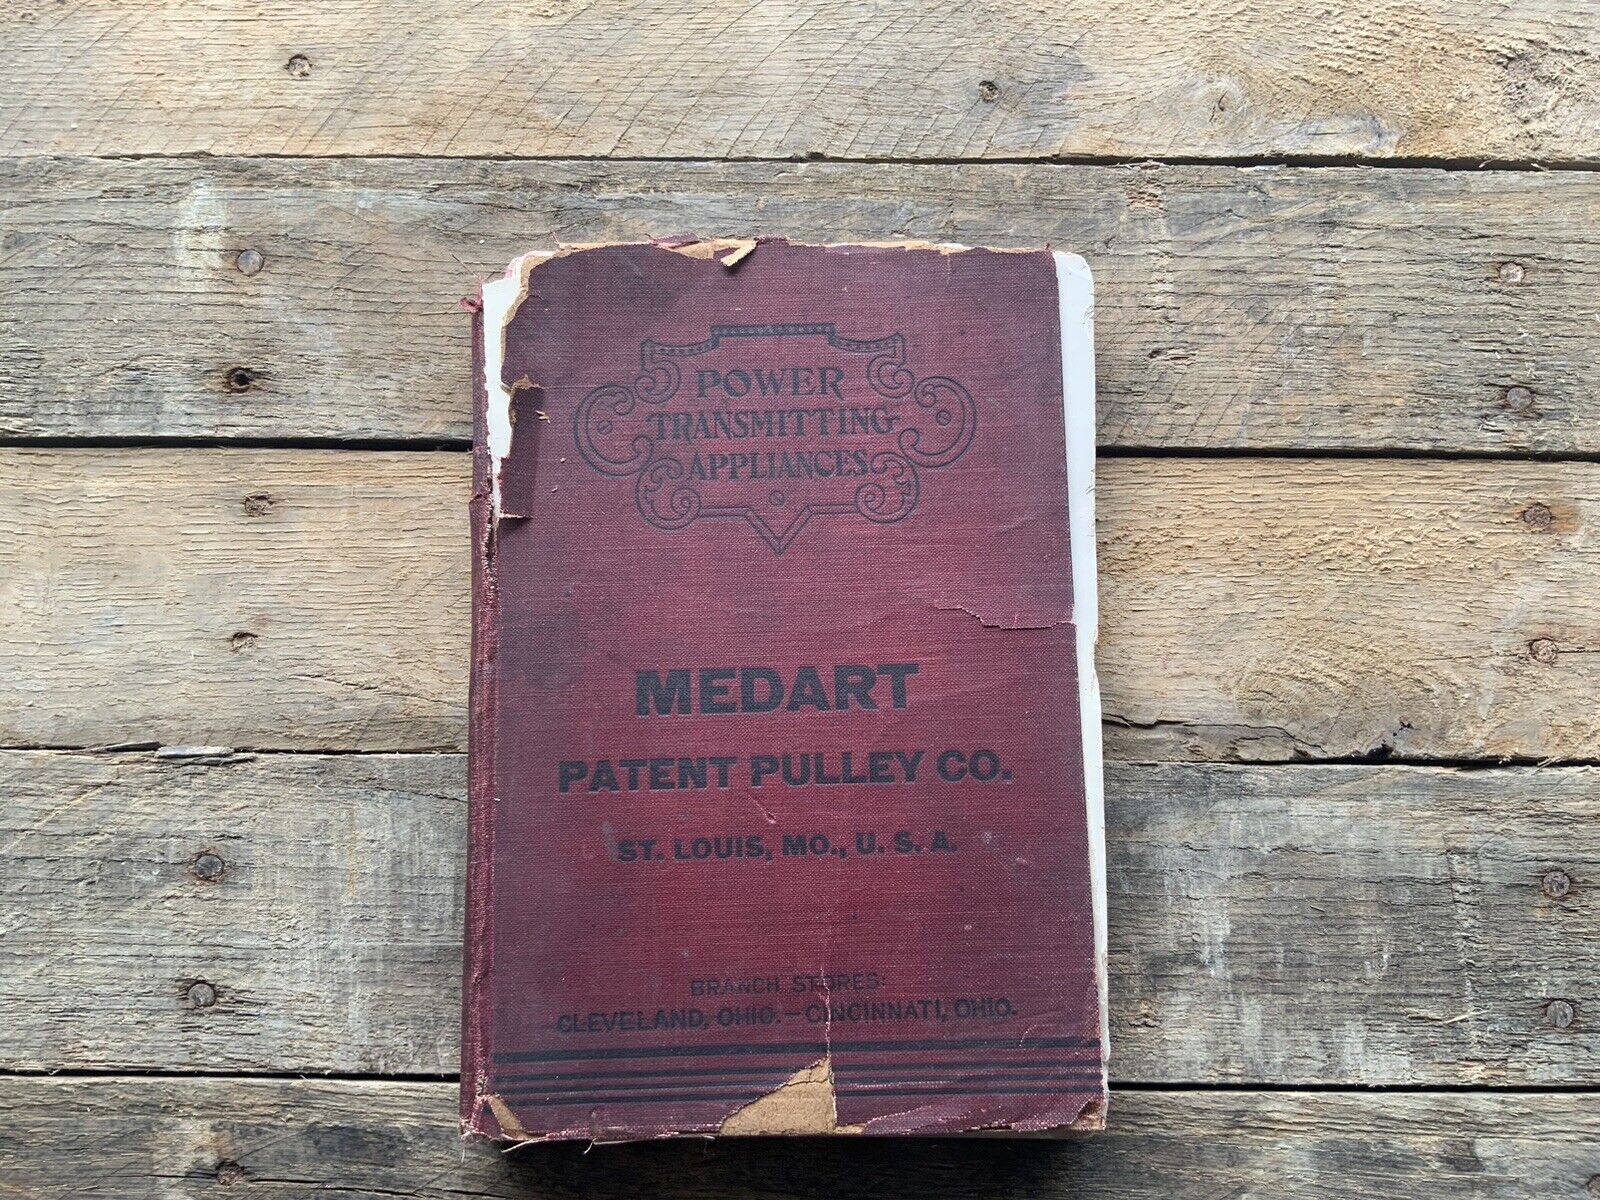 Power Transmitting Appliances Medart Patent Pulley Co. Vintage Tool Catalog